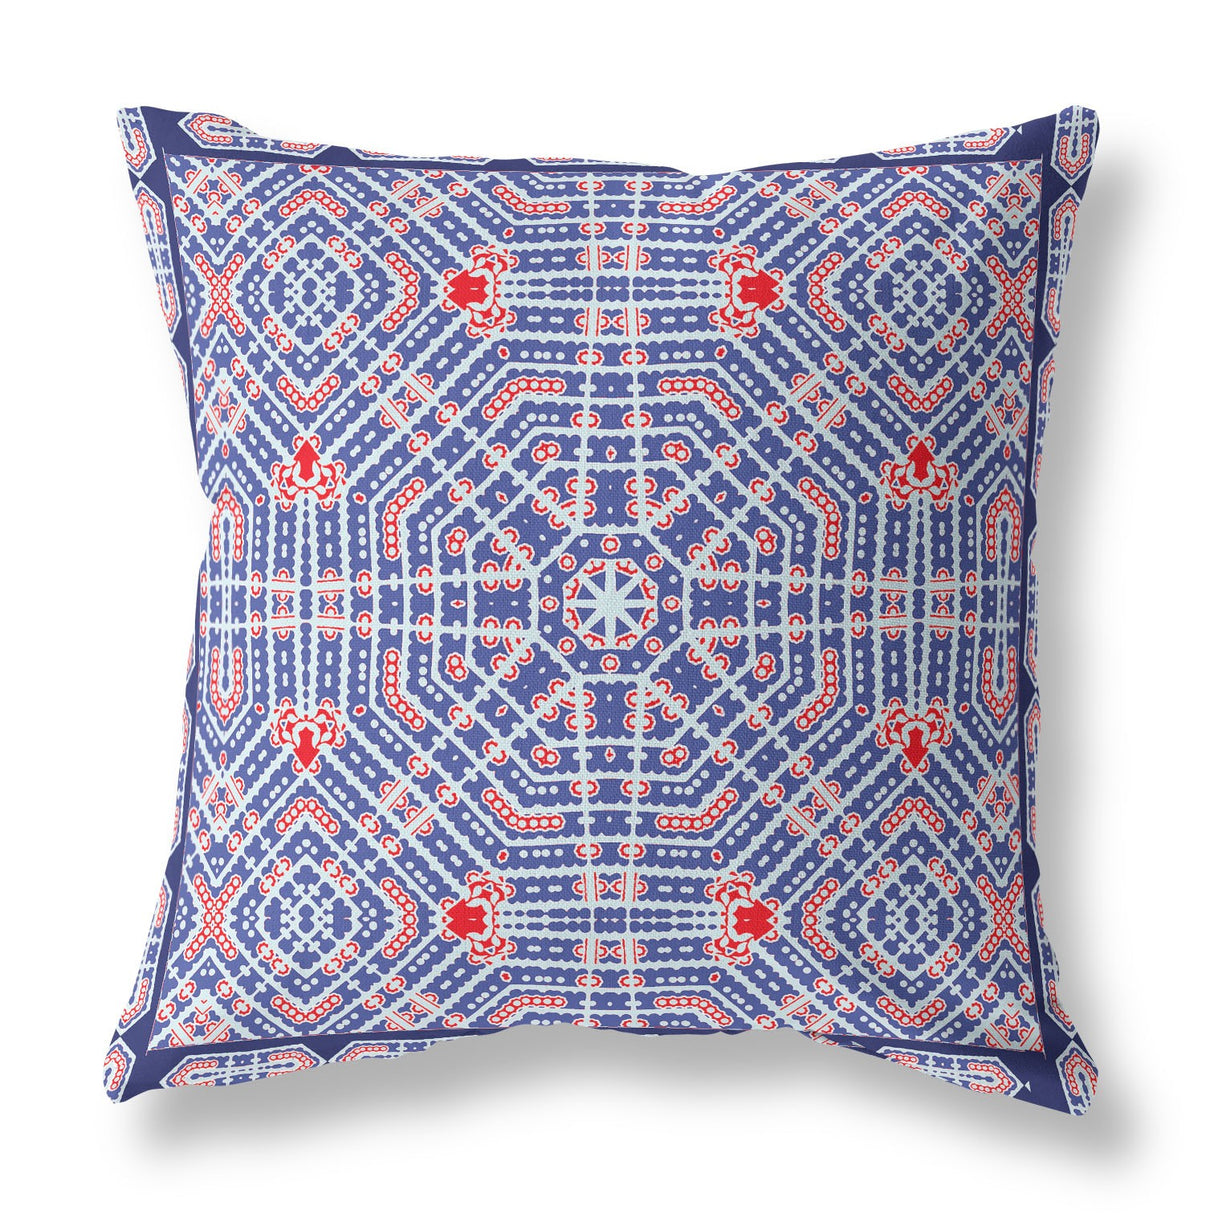 20” Blue Red Geostar Indoor Outdoor Throw Pillow